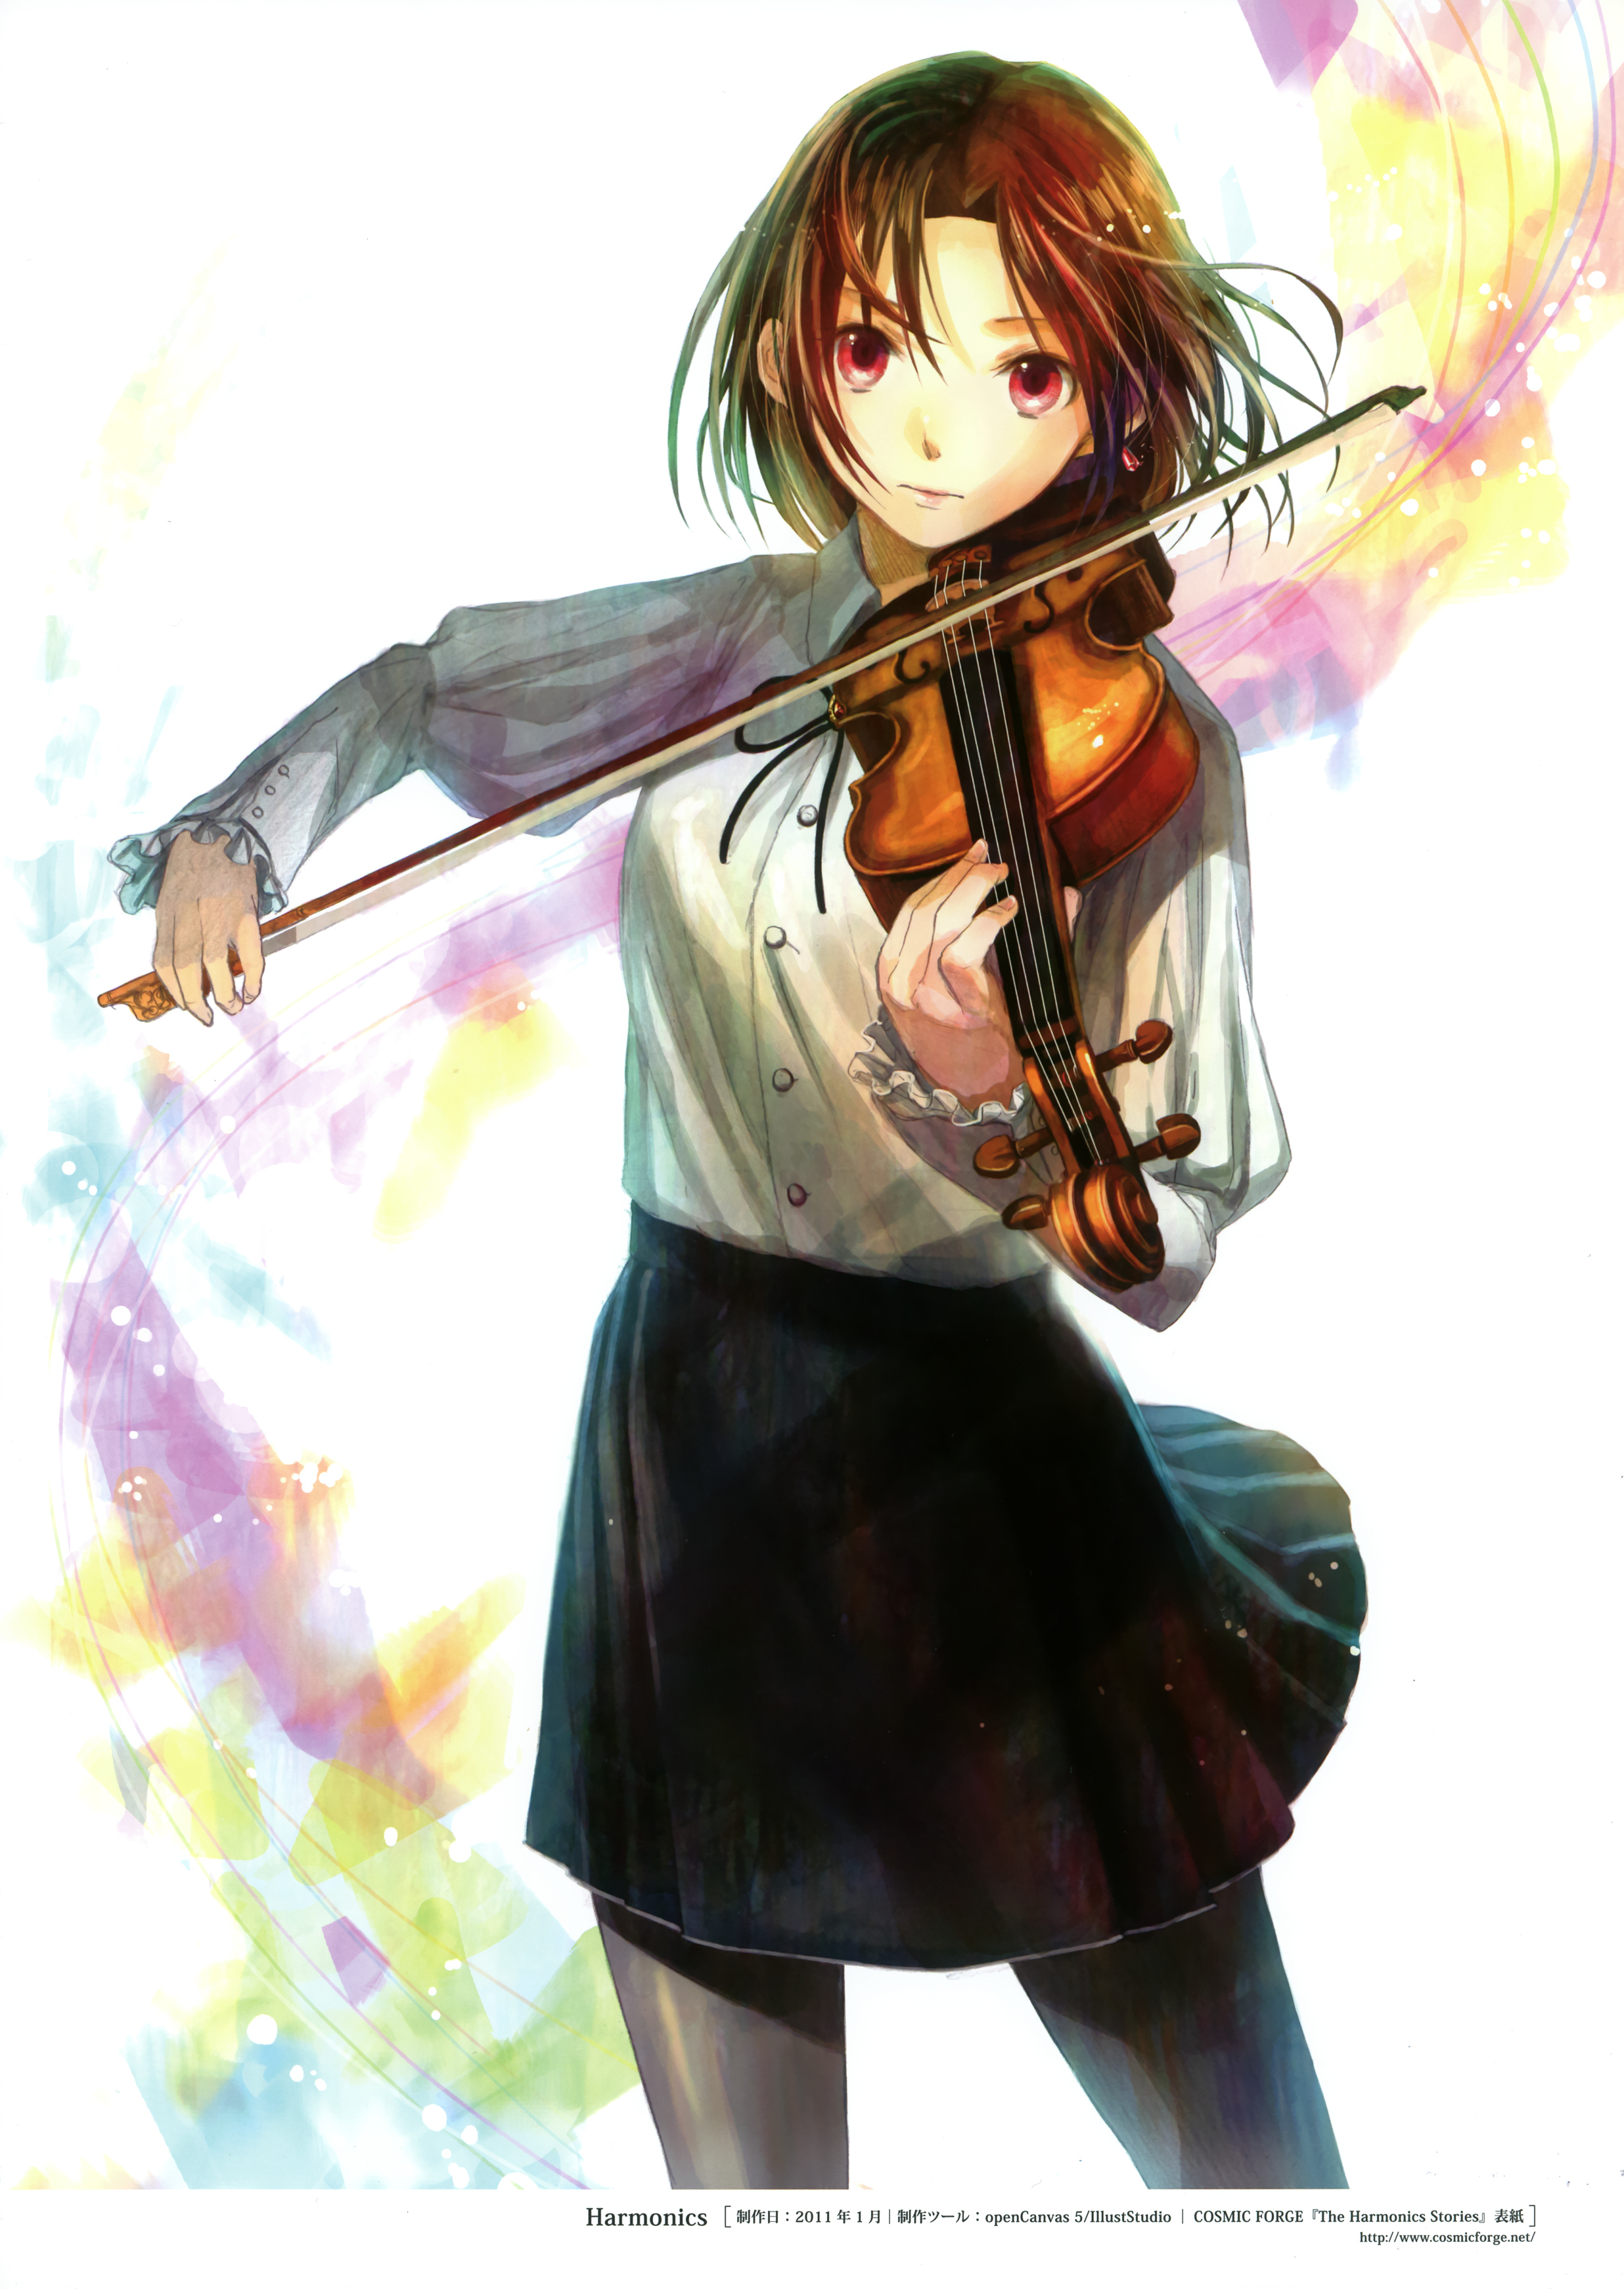 Anime Music Art by Fuji Choko